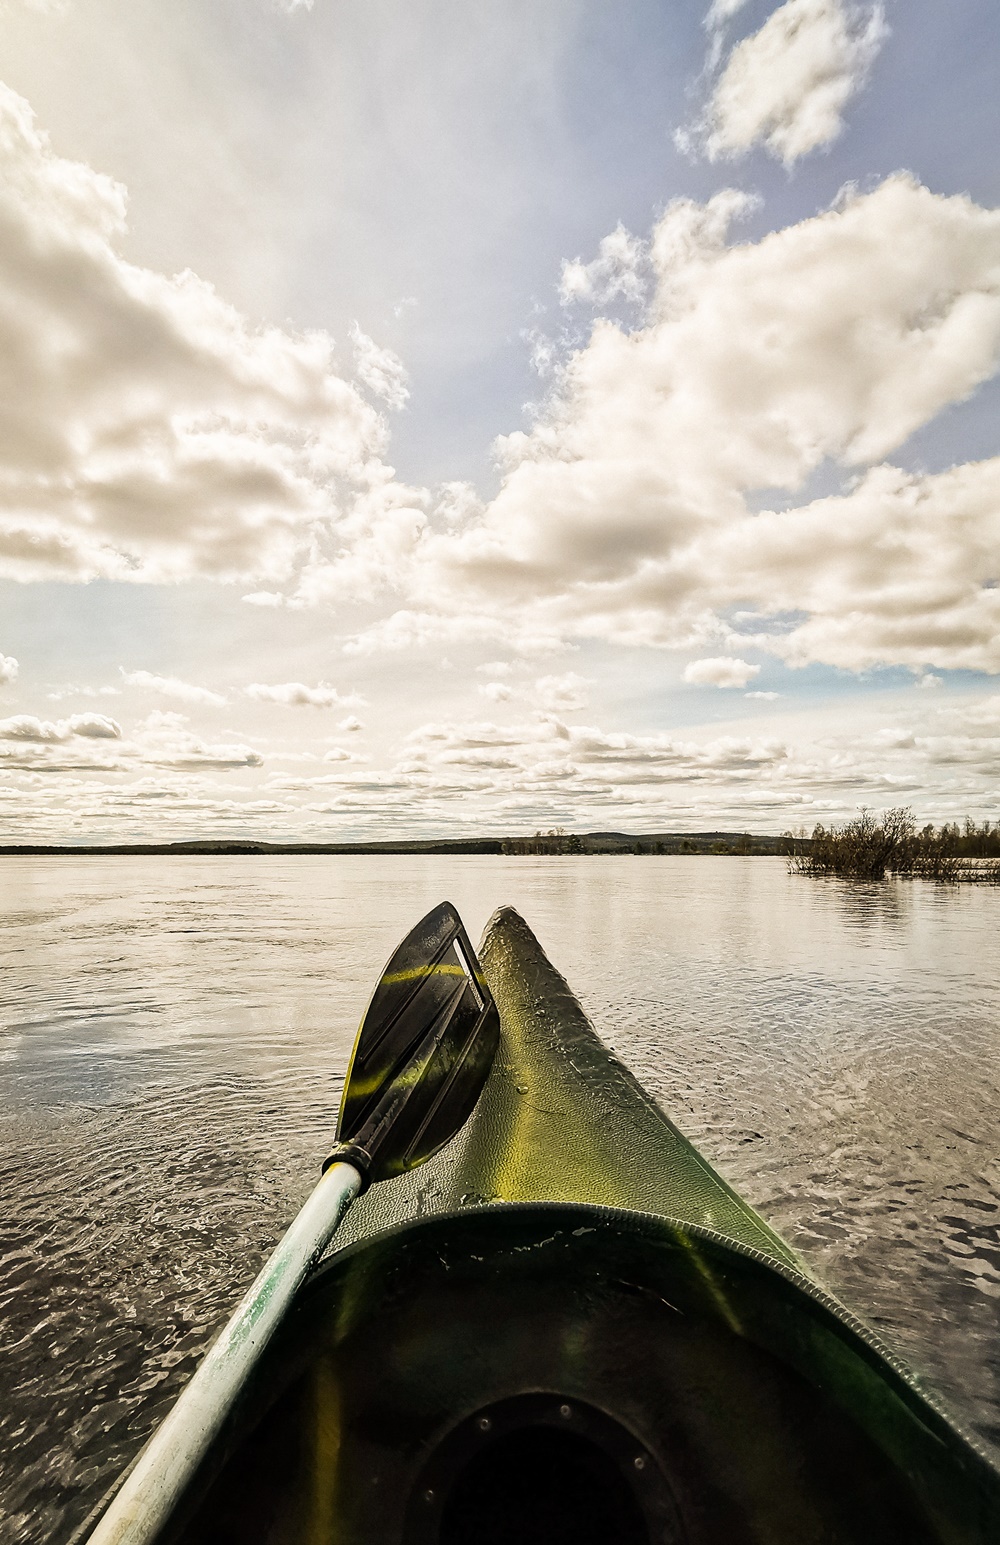 Kayaking in Olkkajärvi in Lapland